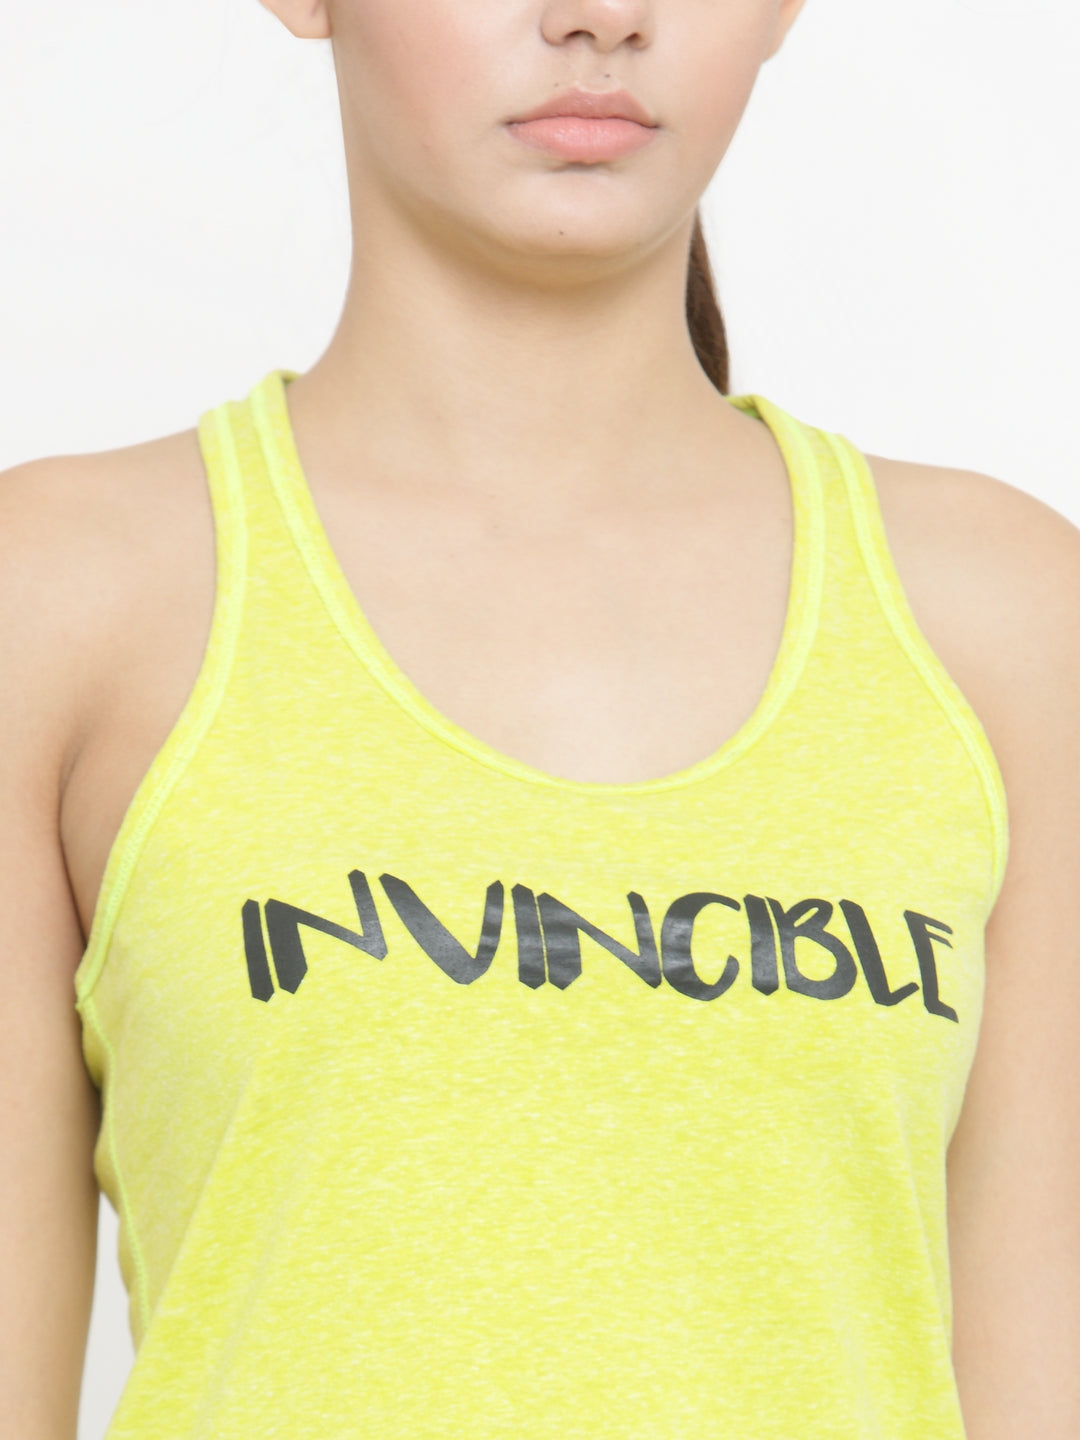 Invincible Women's Athleisure Slogan Workout Tank Top